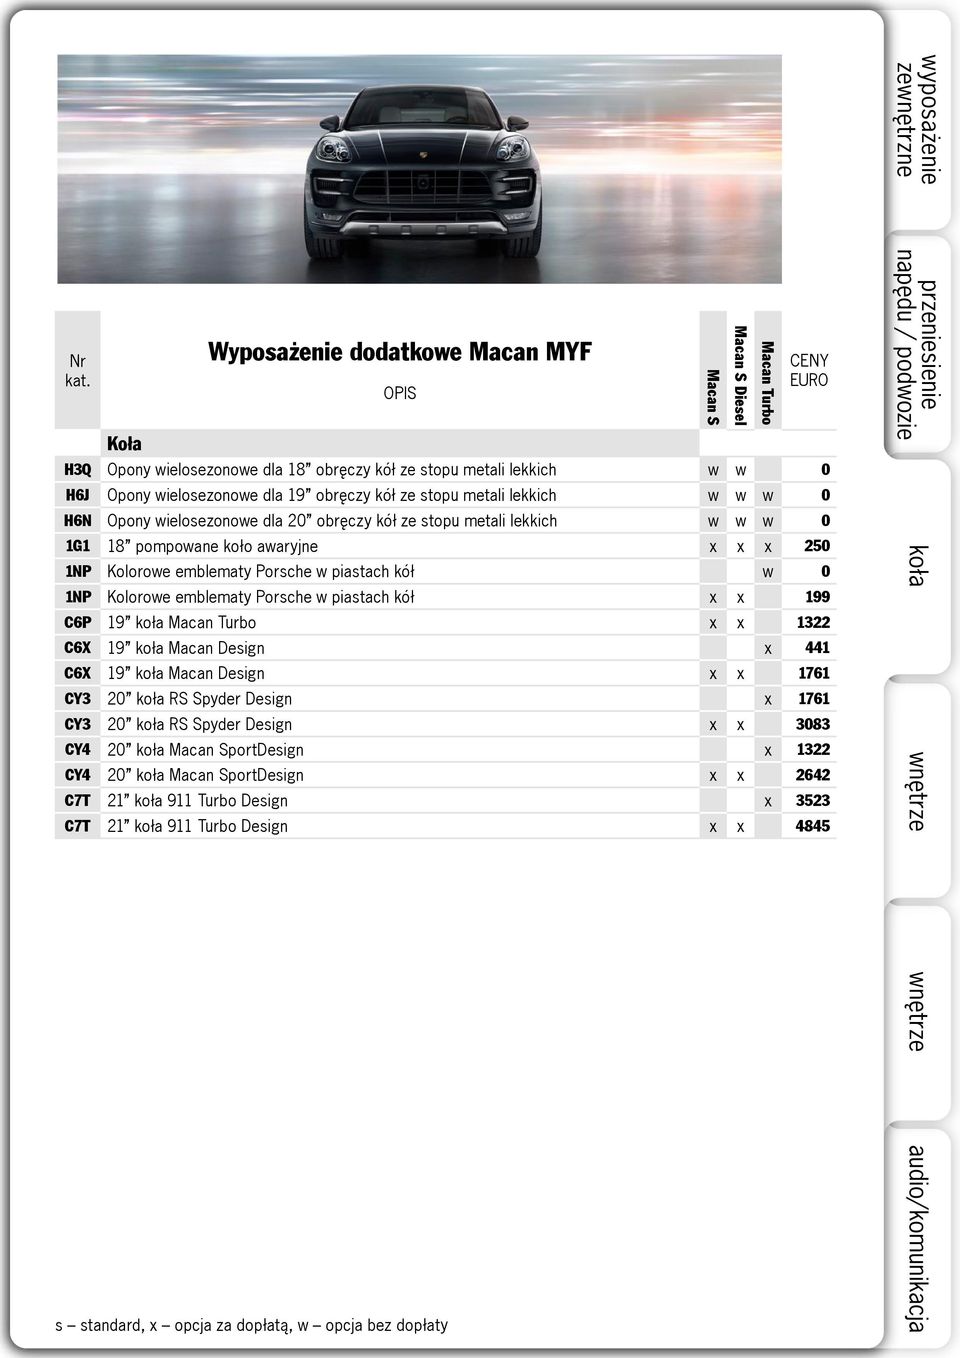 Kolorowe emblematy Porsche w piastach kół x x 199 C6P 19 koła x x 1322 C6X 19 koła Macan Design x 441 C6X 19 koła Macan Design x x 1761 CY3 20 koła RS Spyder Design x